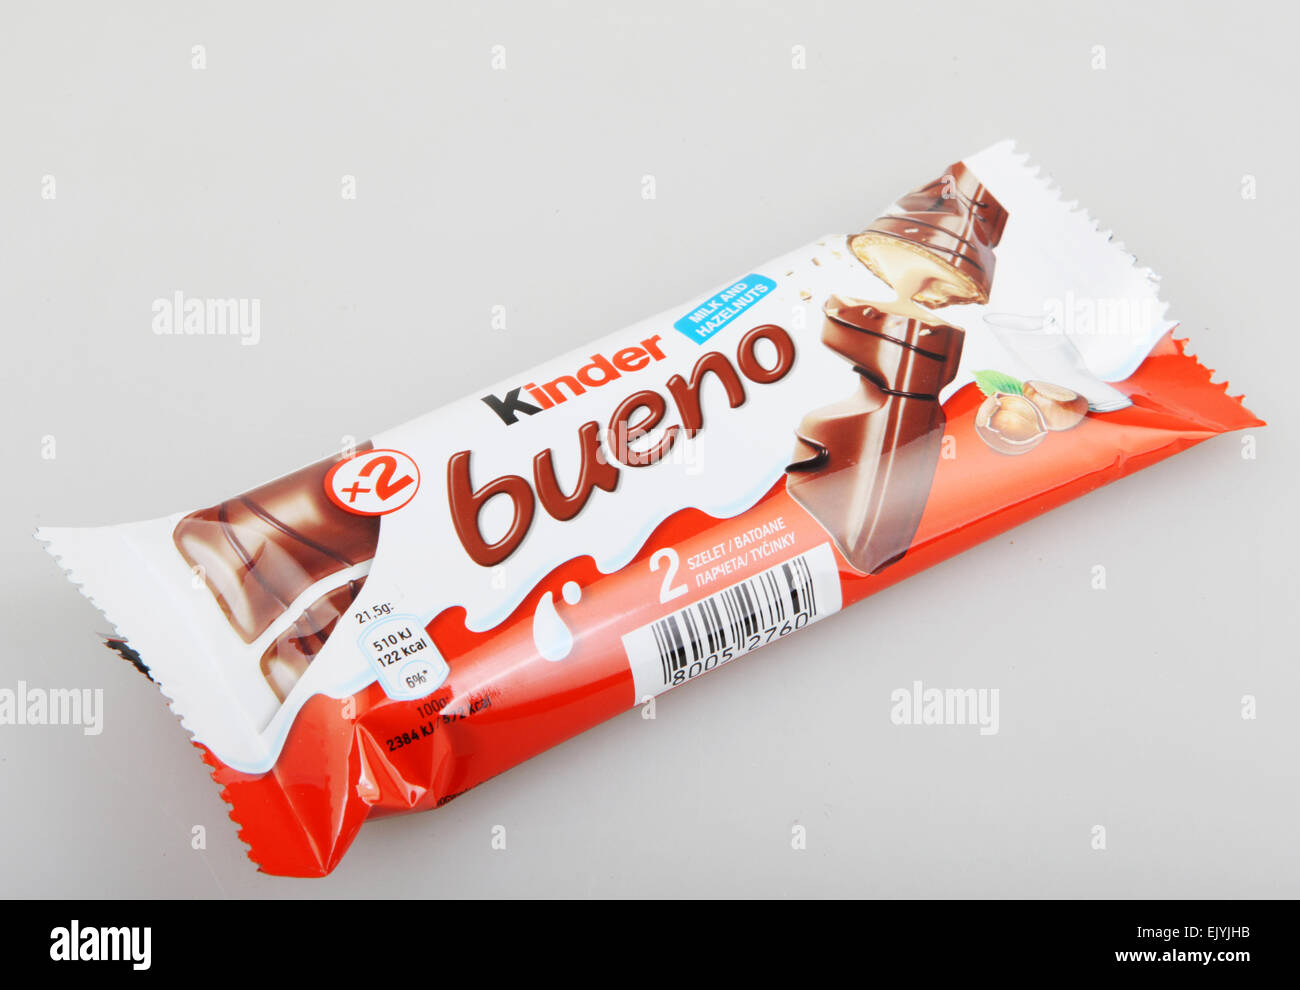 https://c8.alamy.com/comp/EJYJHB/aytos-bulgaria-april-03-2015-kinder-bueno-chocolate-candy-bar-kinder-EJYJHB.jpg